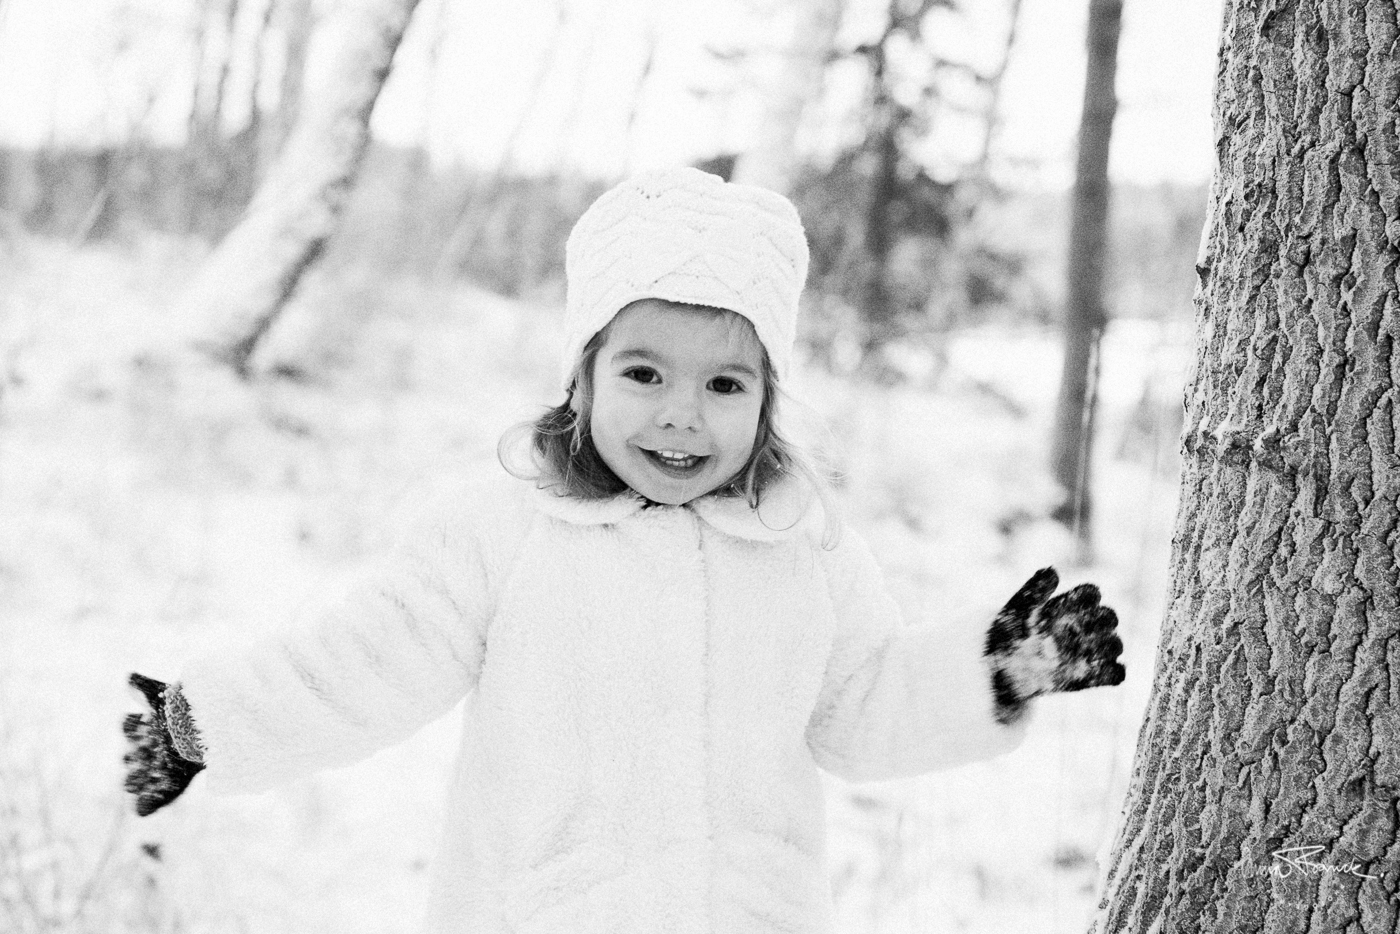 barnfotografering, lapsikuvaus, kids, portrait, photography, valokuvaus, fotografering, porträtt, anna, franck, winter, vinter, talvi, söpö, söt, sweet, stockholm, sweden, sverige, snö, snow, lunta